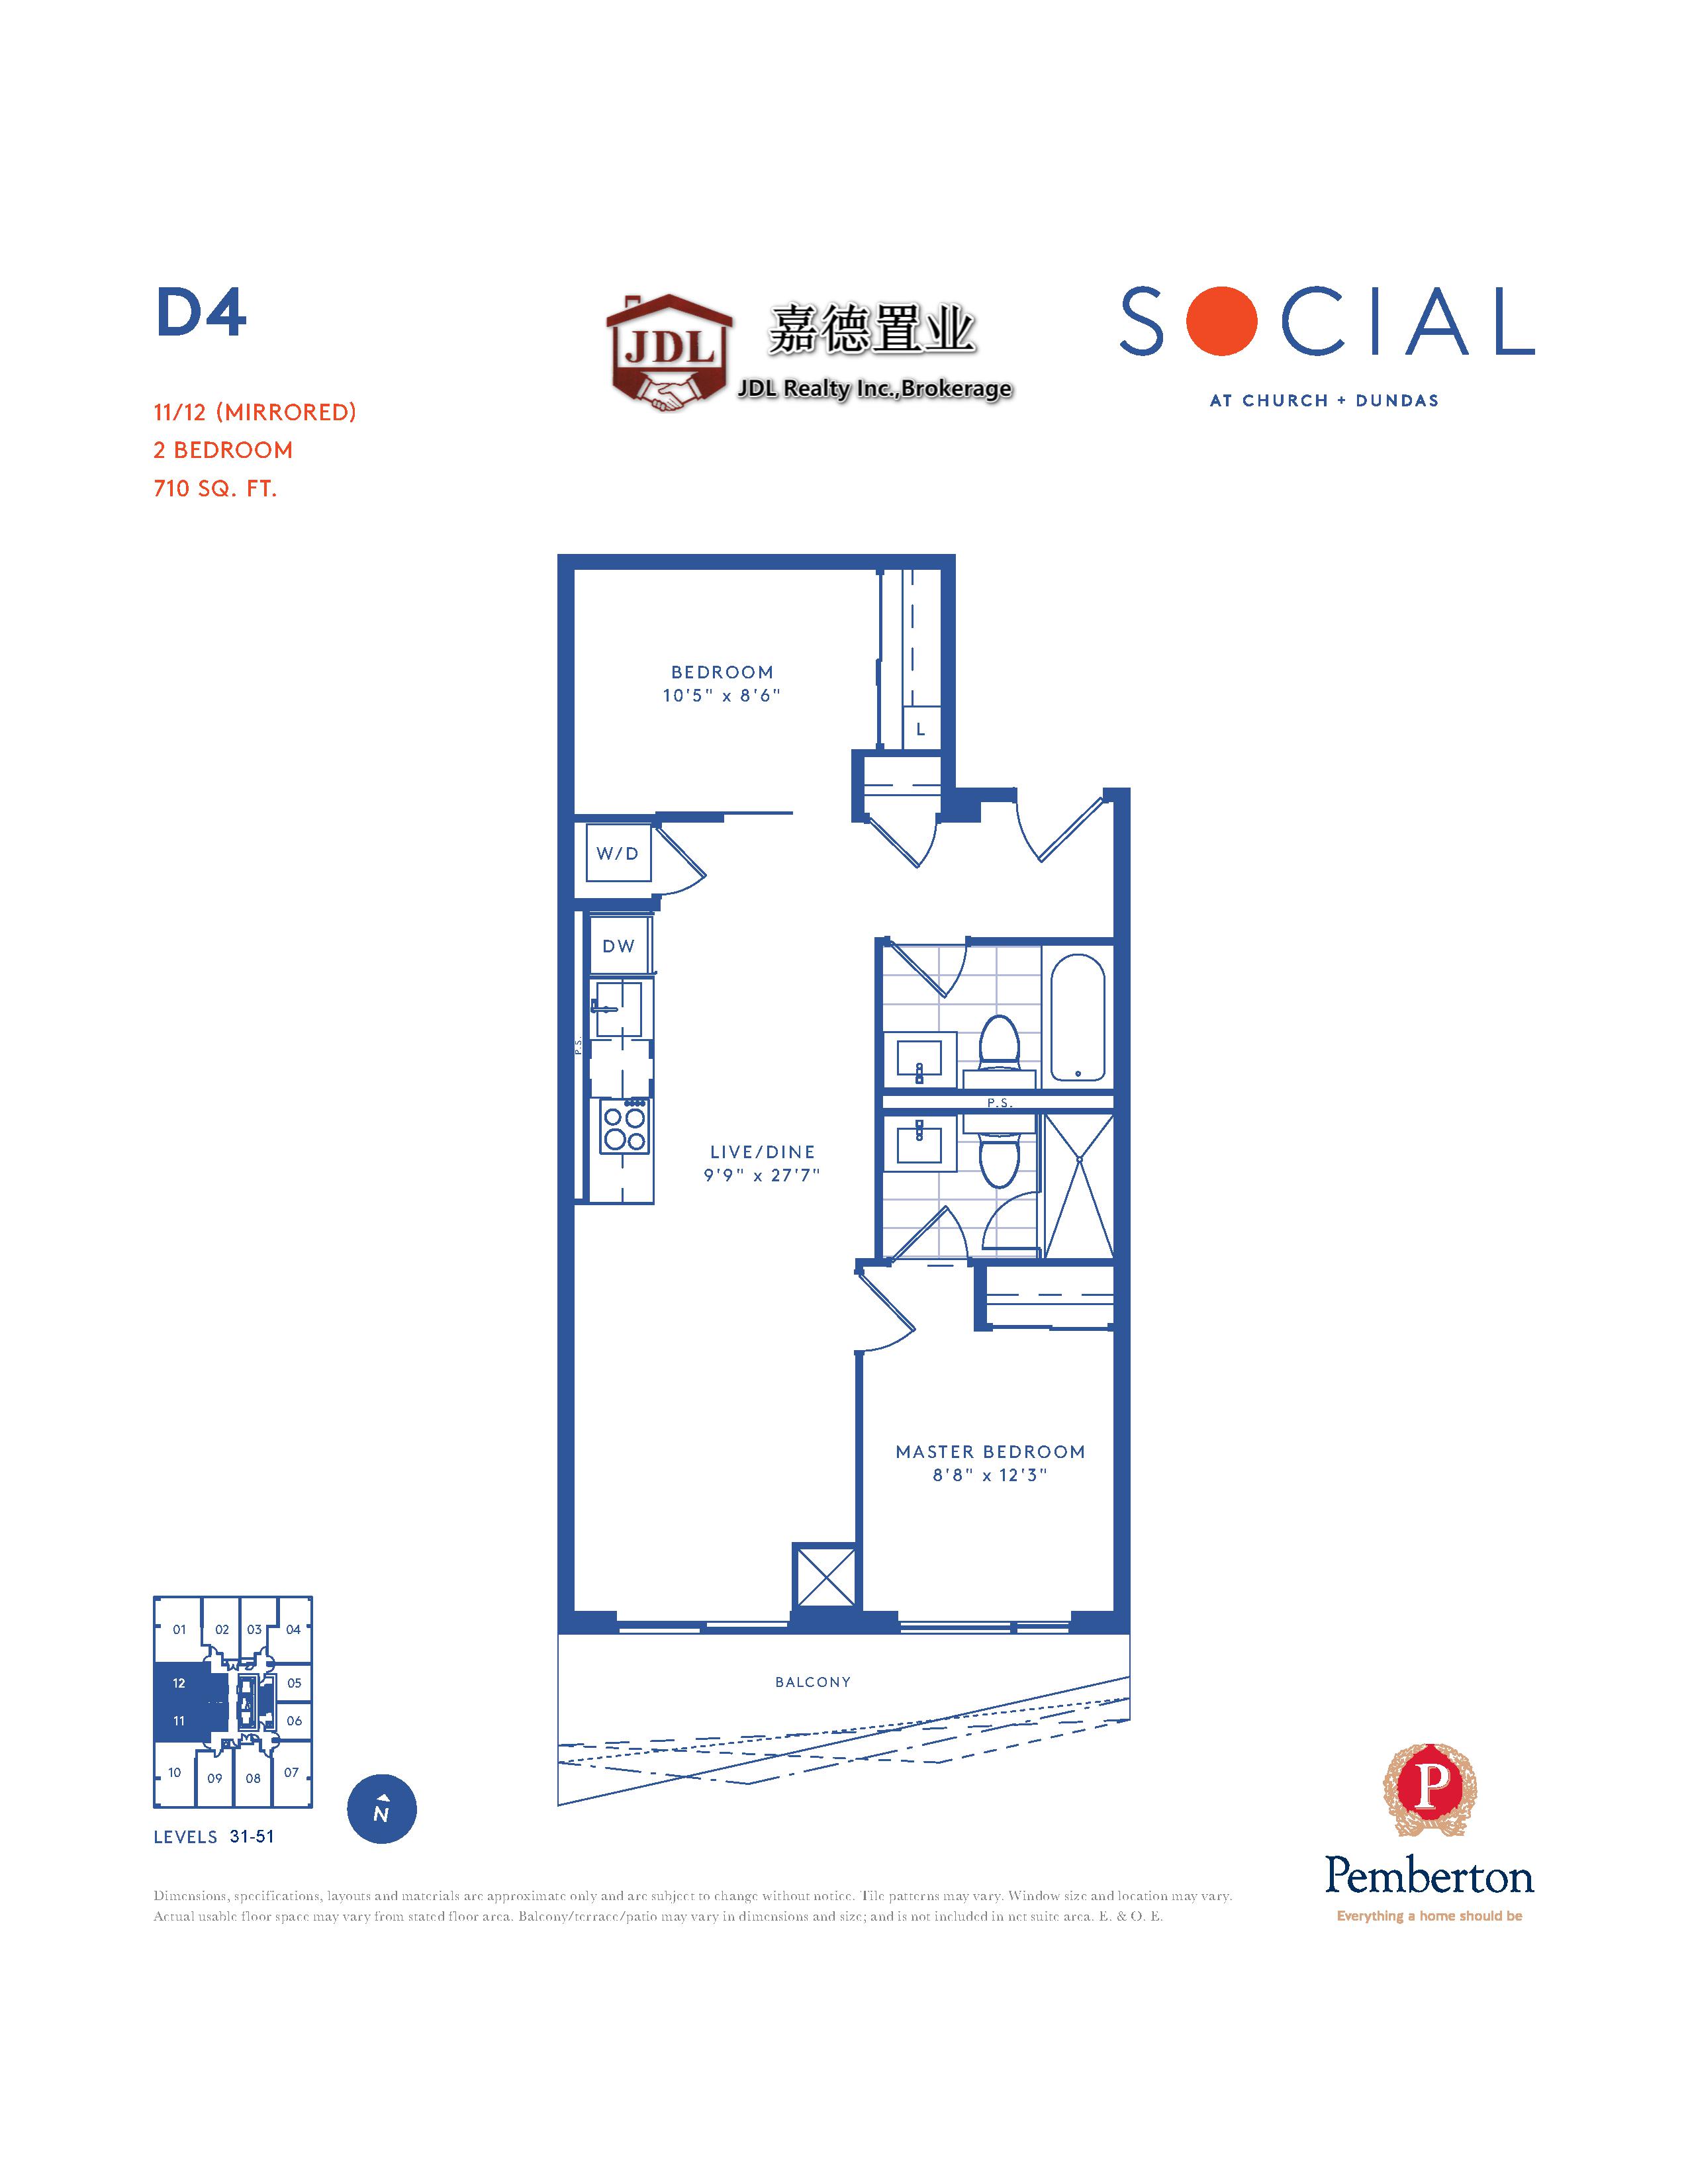 Social Tower floor plan 1 14